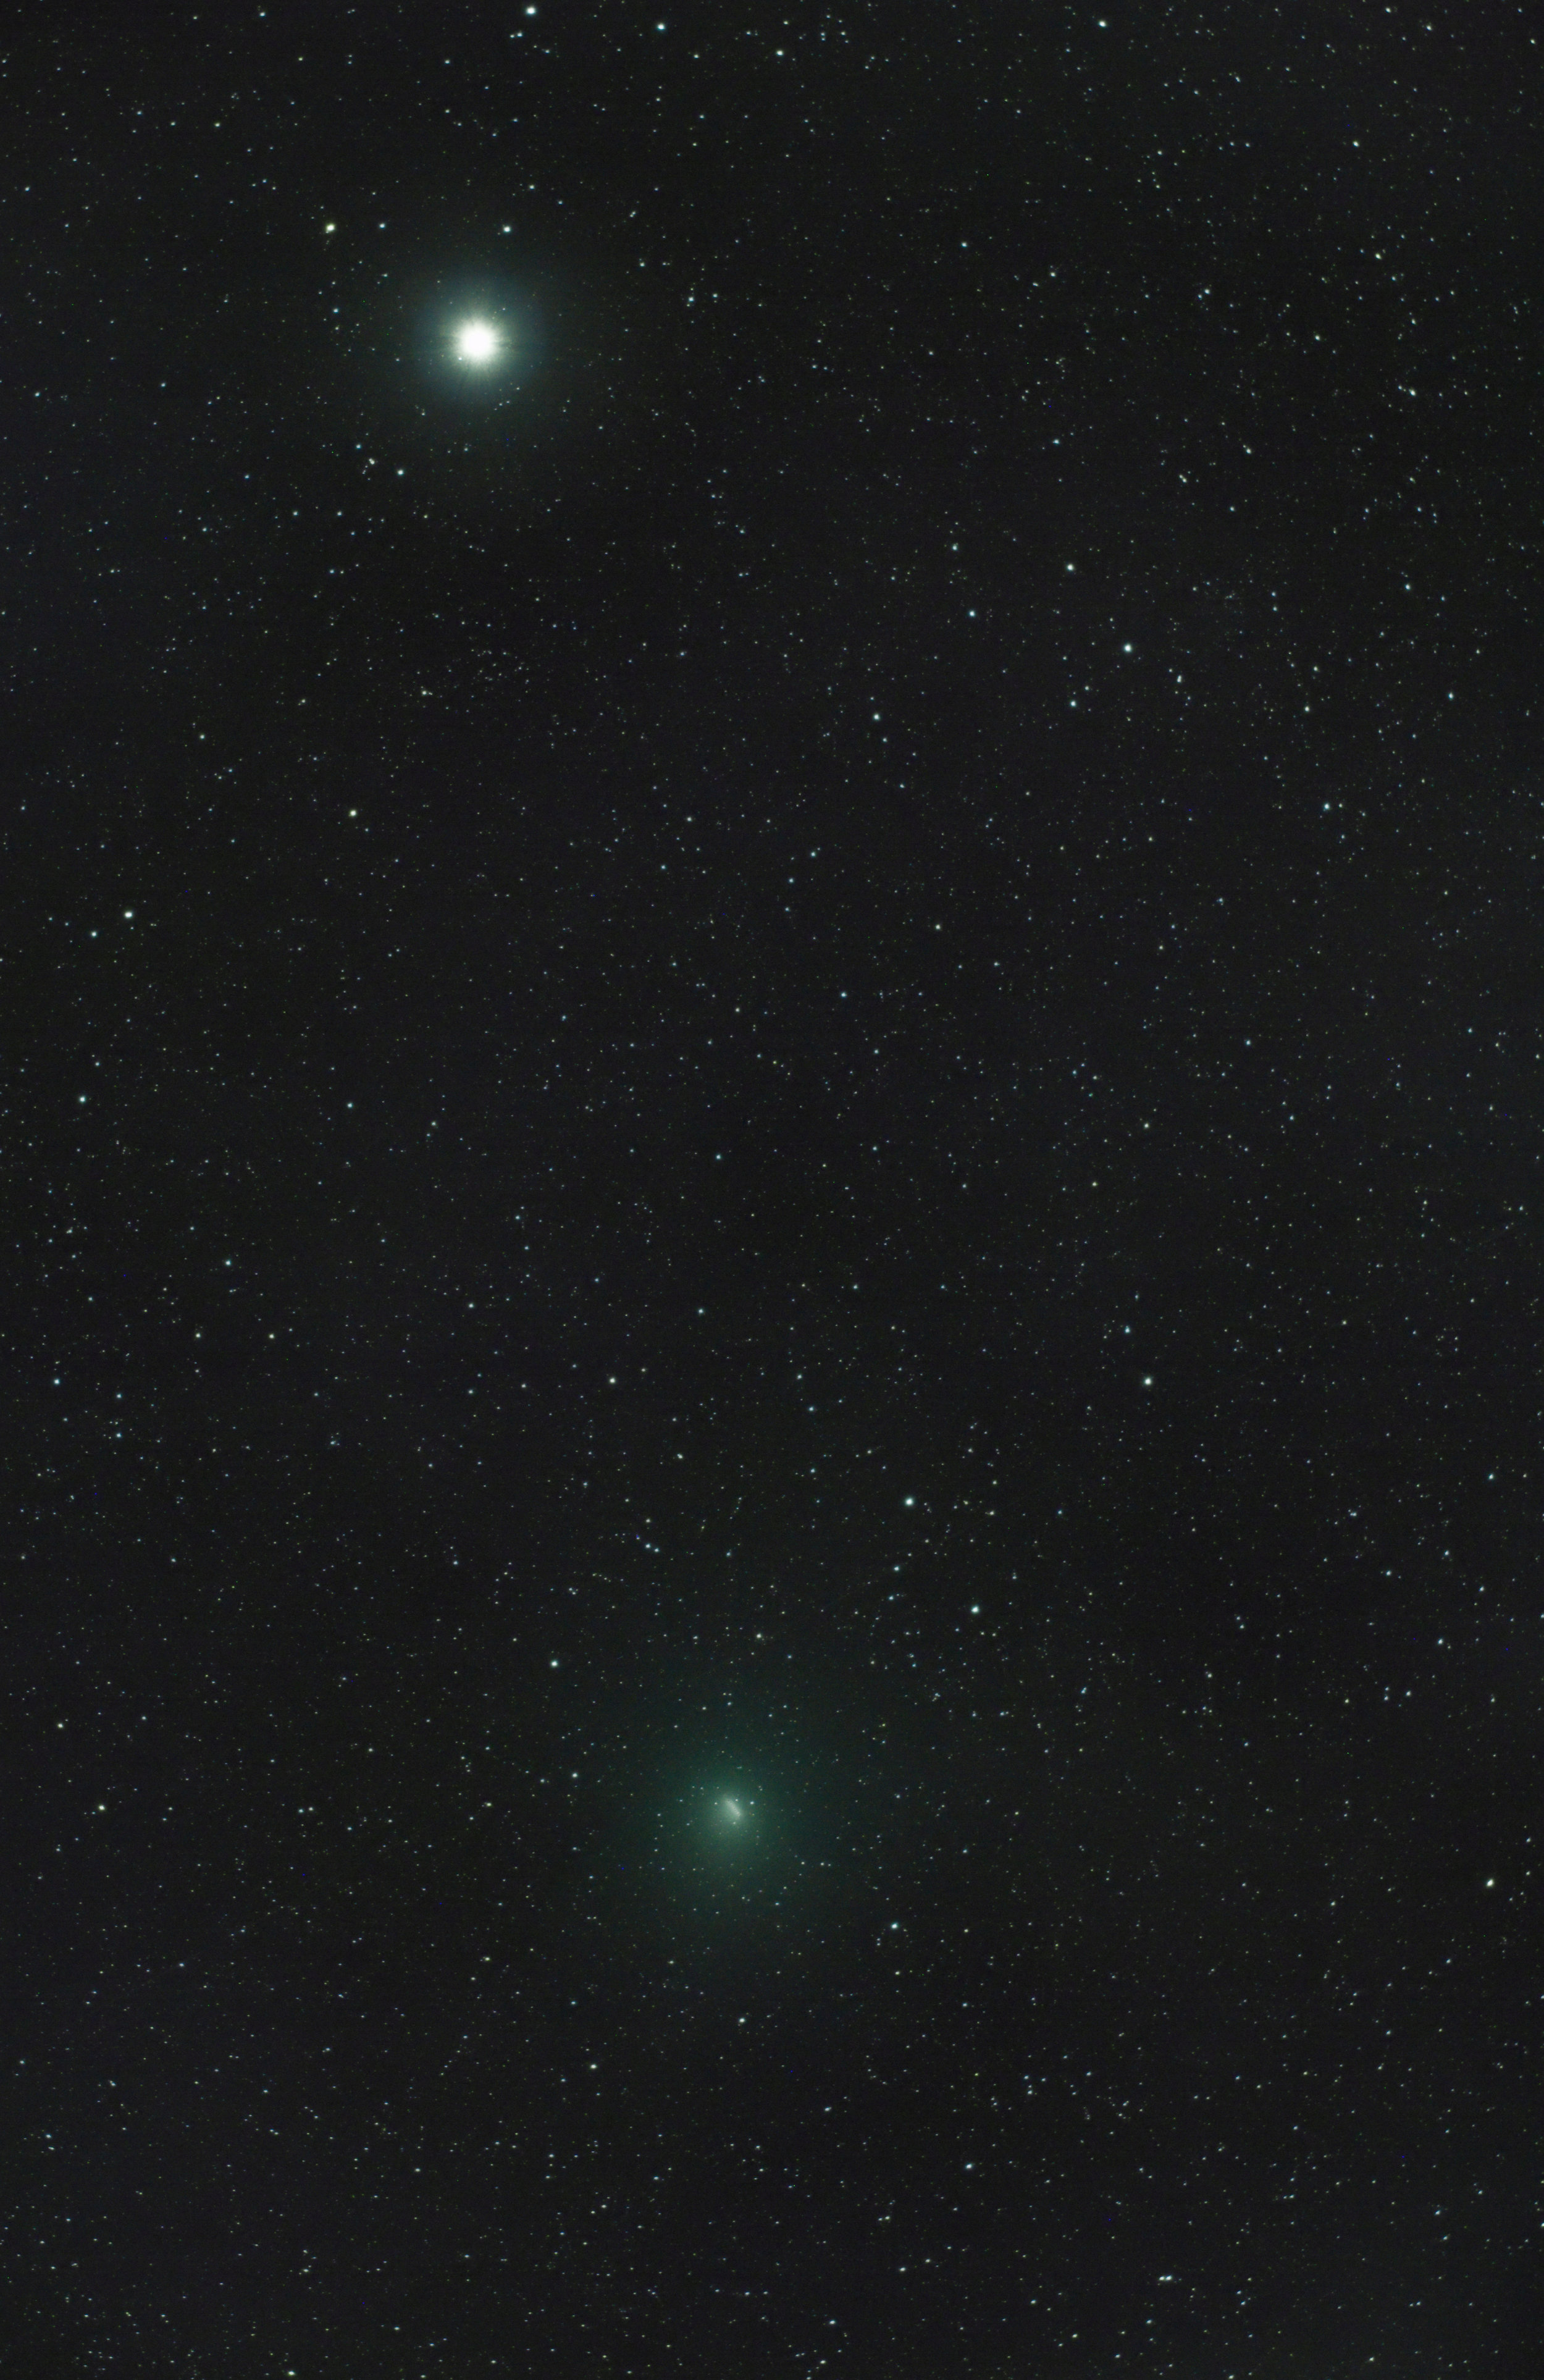 Comet 46/P Wirtanen passing Capella